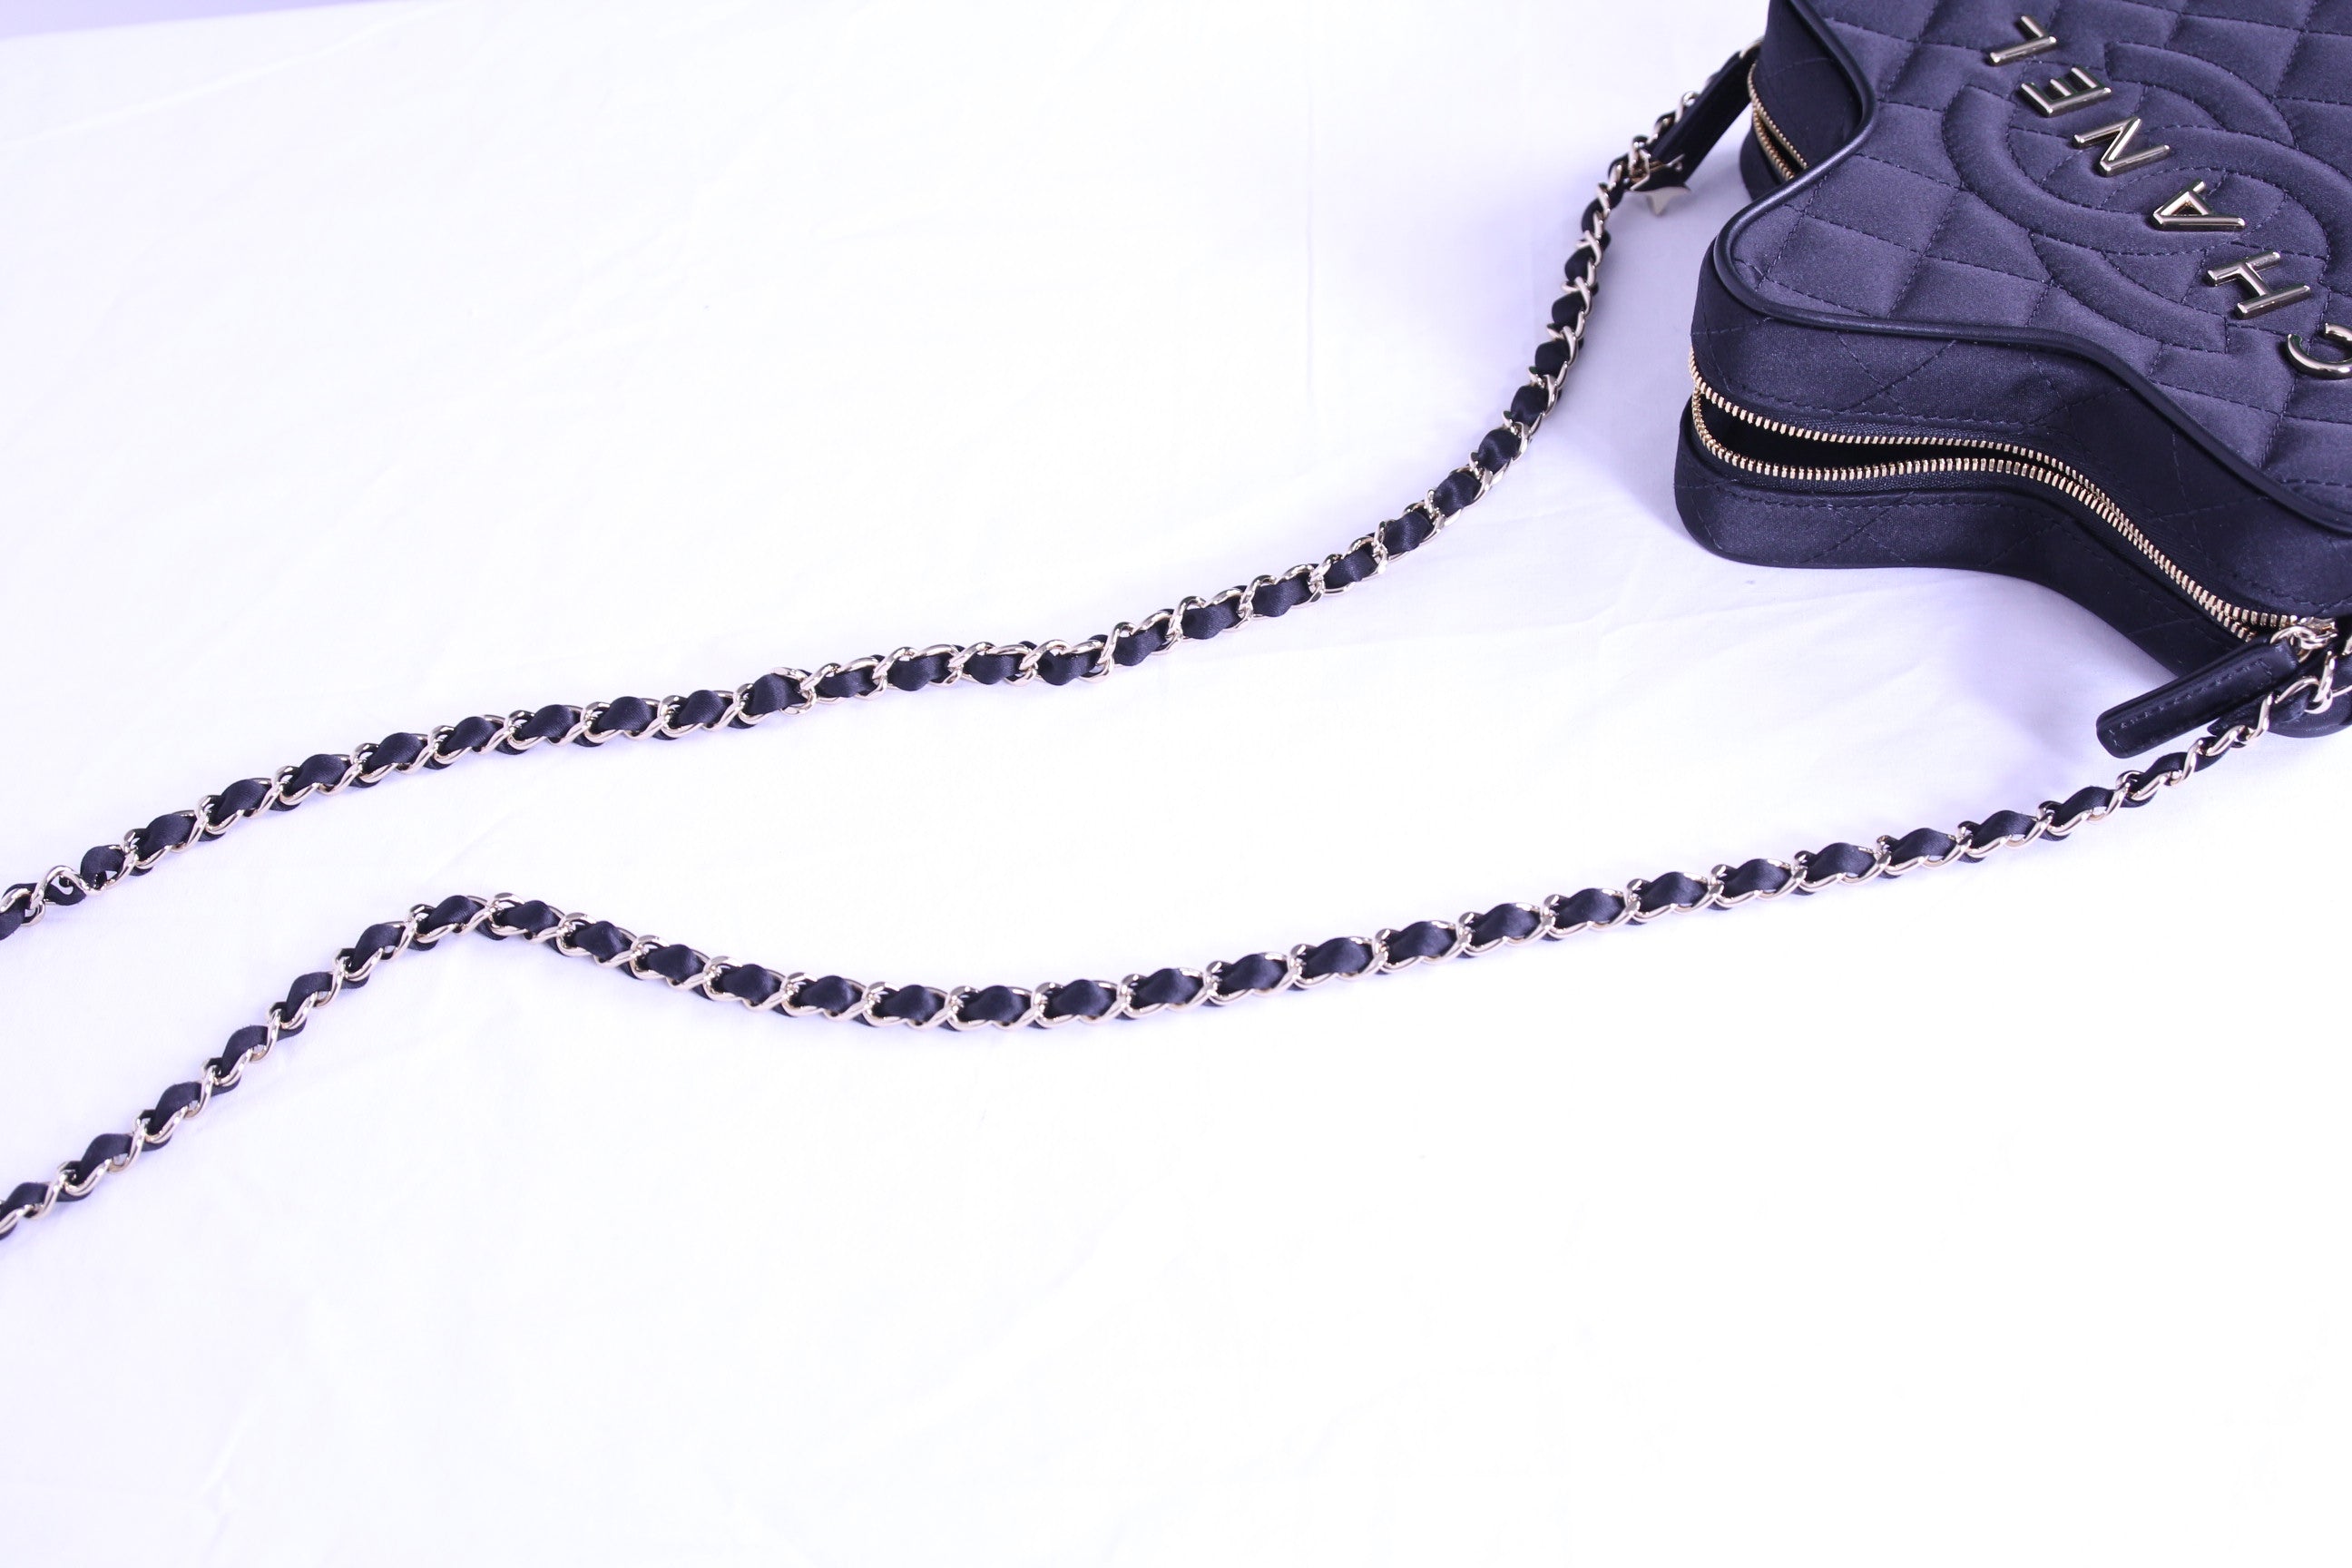 Chain of Chanel star handbag in finished in black satin